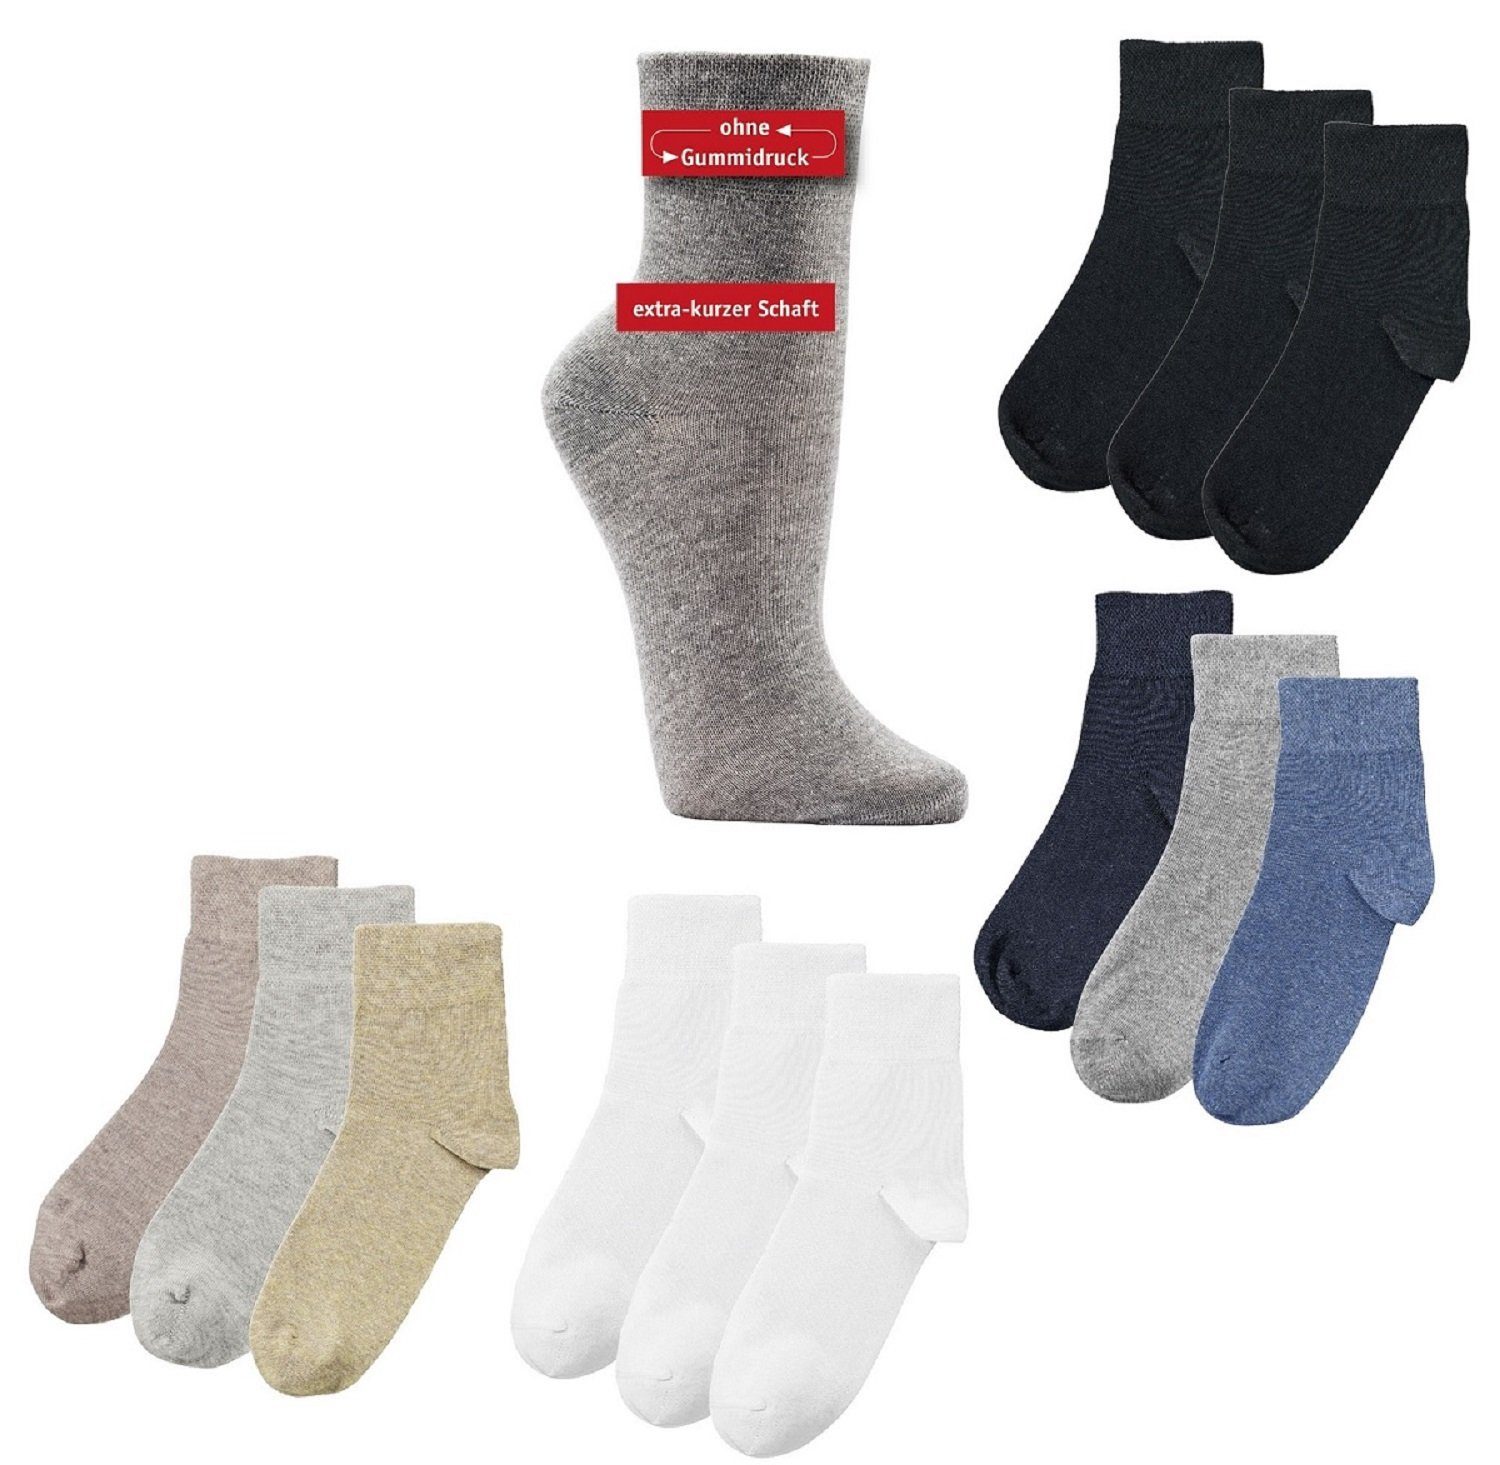 Socks 4 Kurzschaft hell Fun sortiert Diabetikersocken Wellness (3-Paar, 3 Baumwolle Paar)